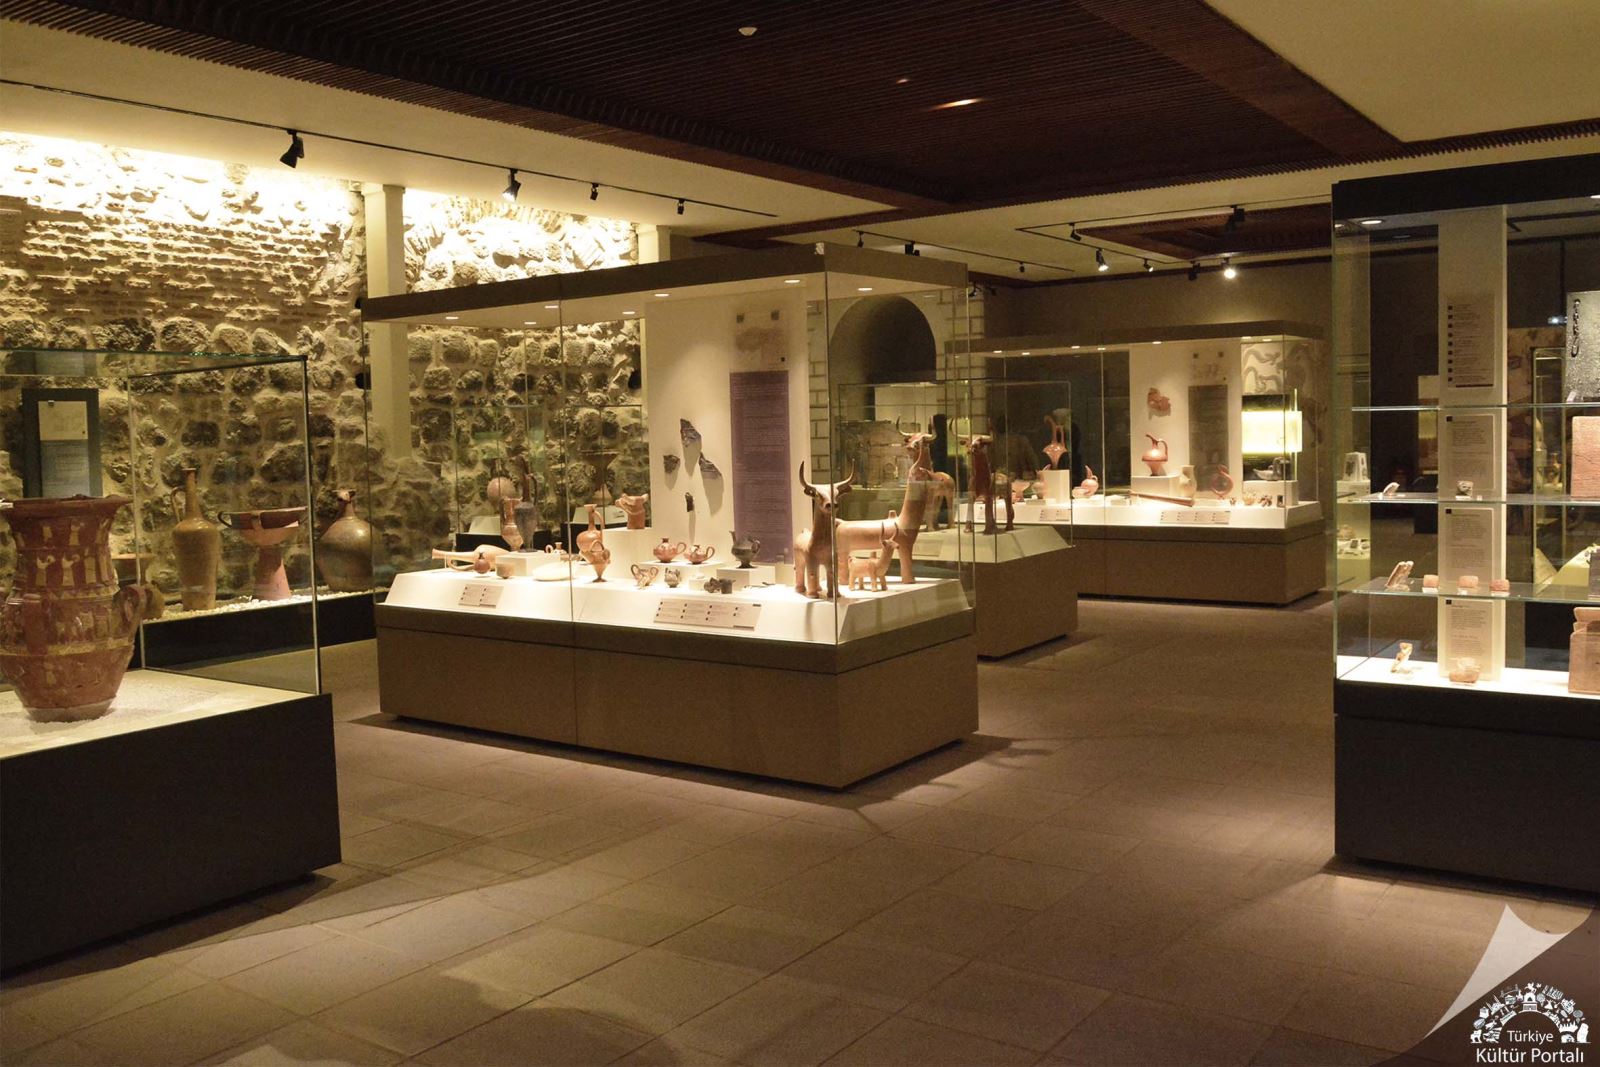 Anatolian Civilizations Museum - Ankara